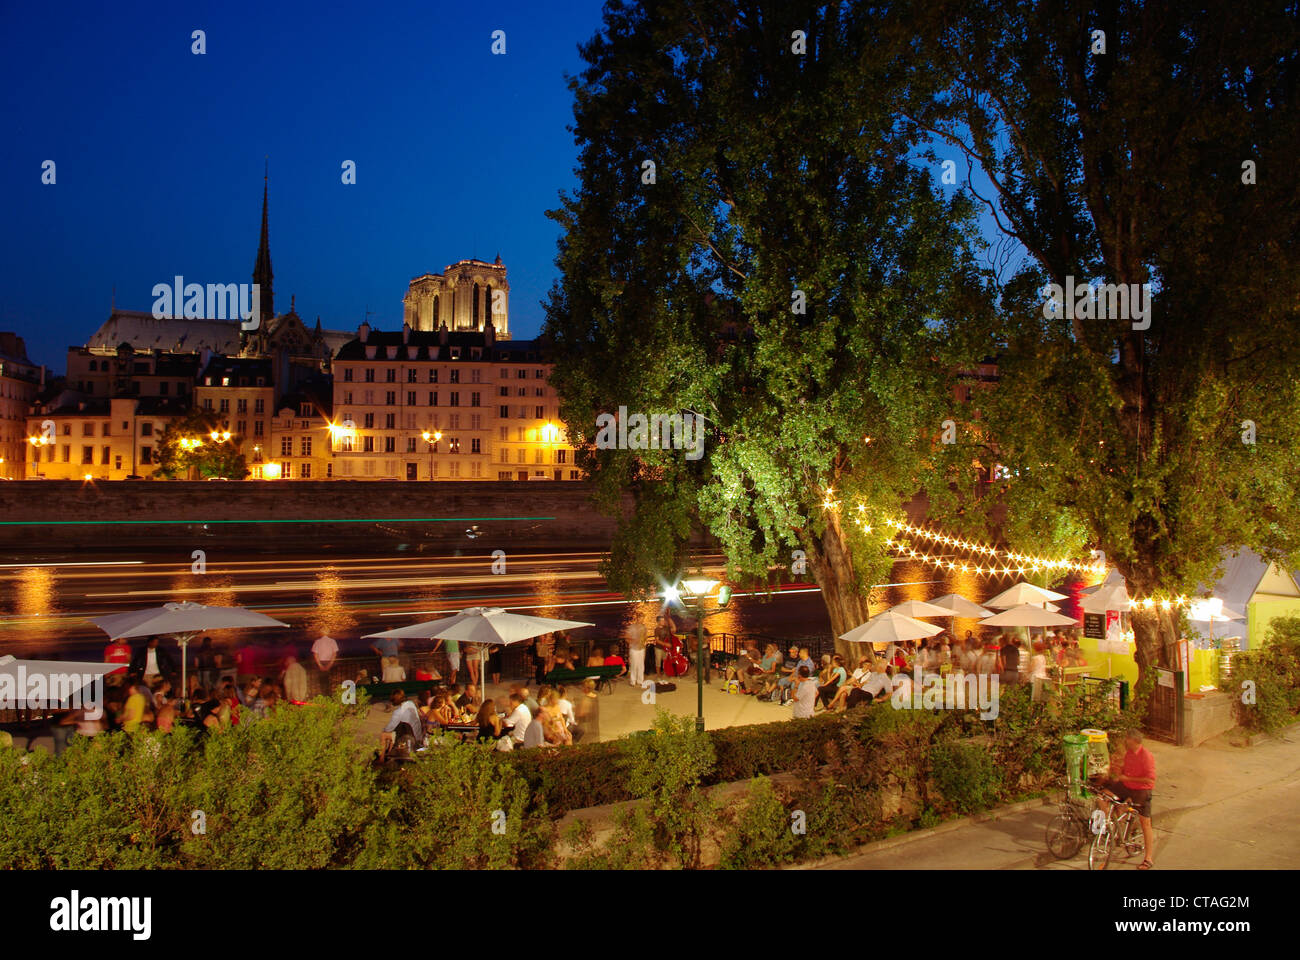 Paris plage. People enjoy the quais of the Seine at night in Paris during summer Stock Photo